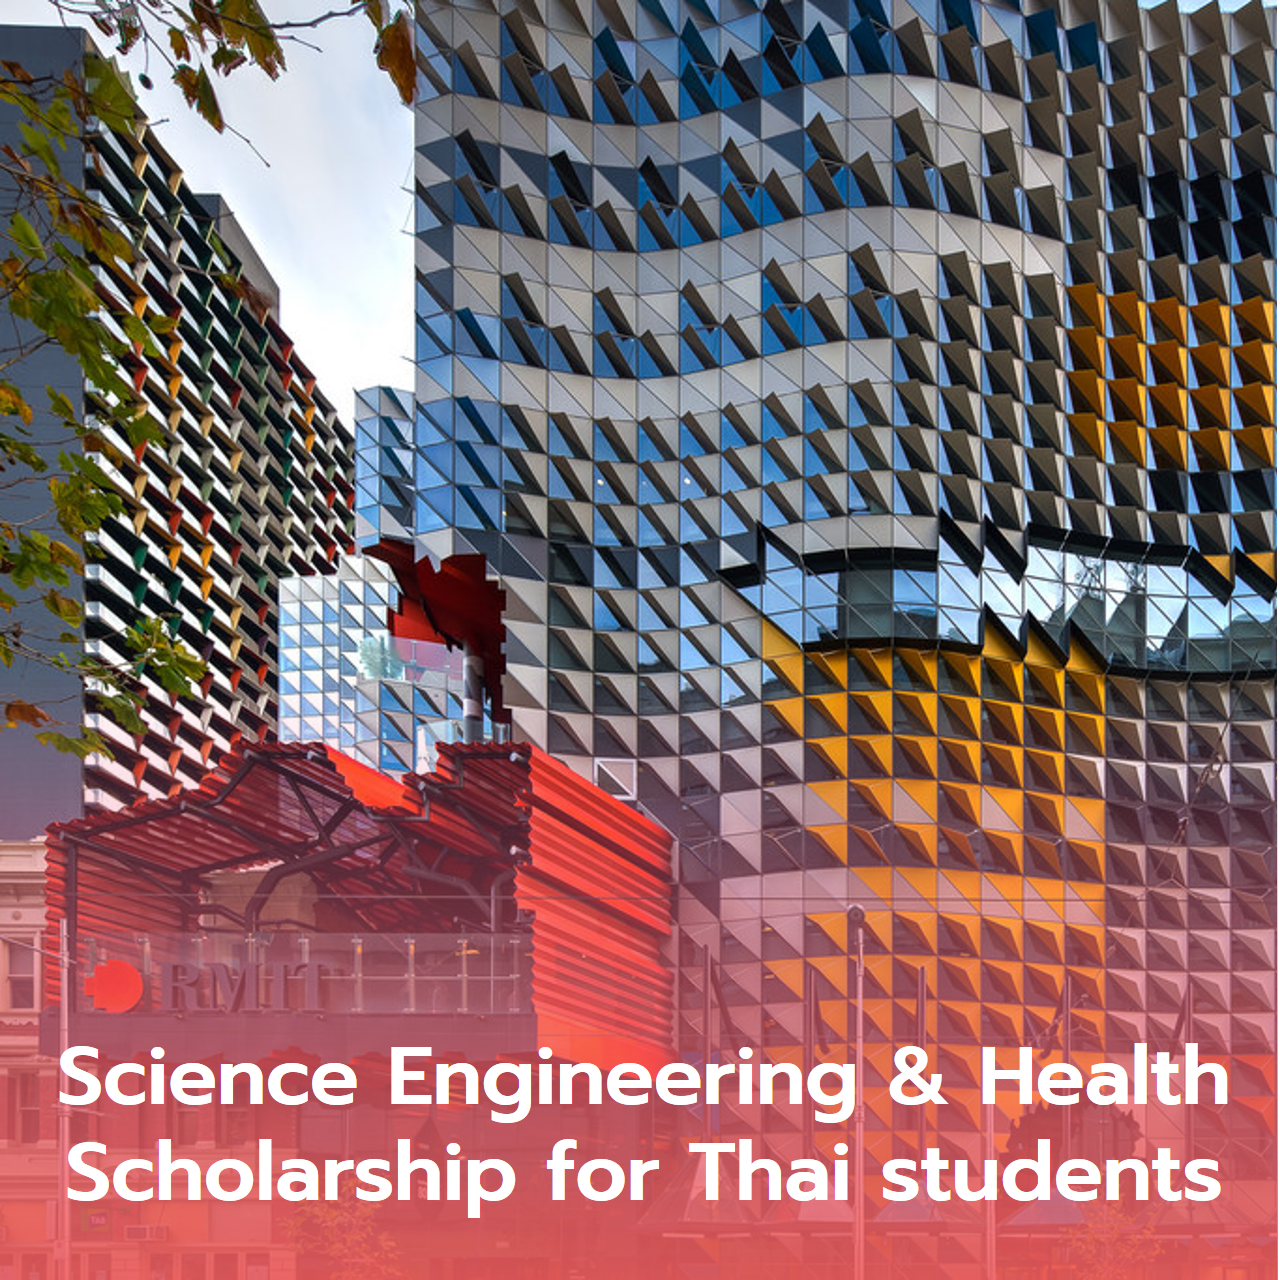  Science Engineering & Health Scholarship